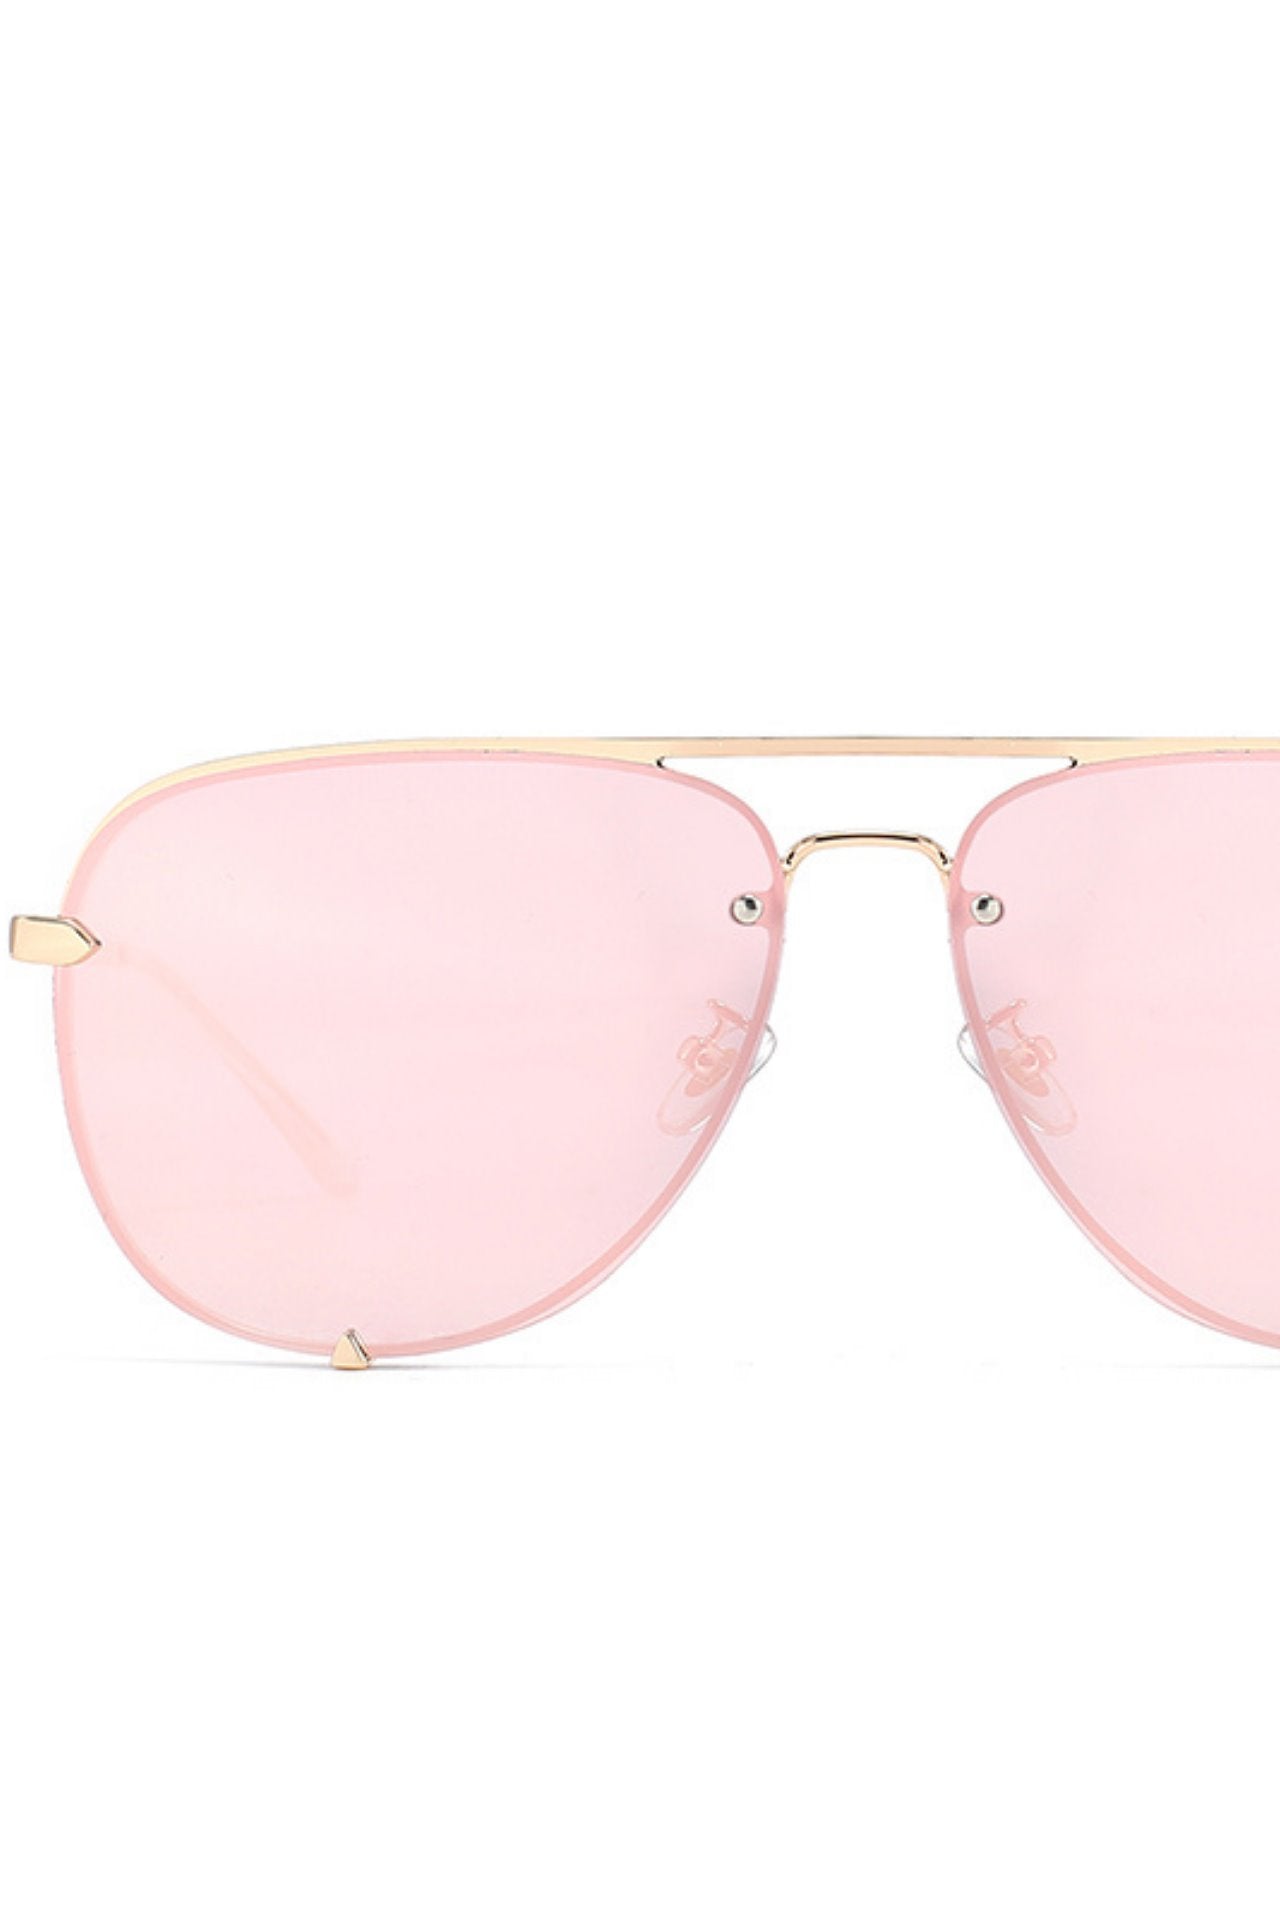 Hotel California Aviator Sunglasses - Jess Lea Boutique